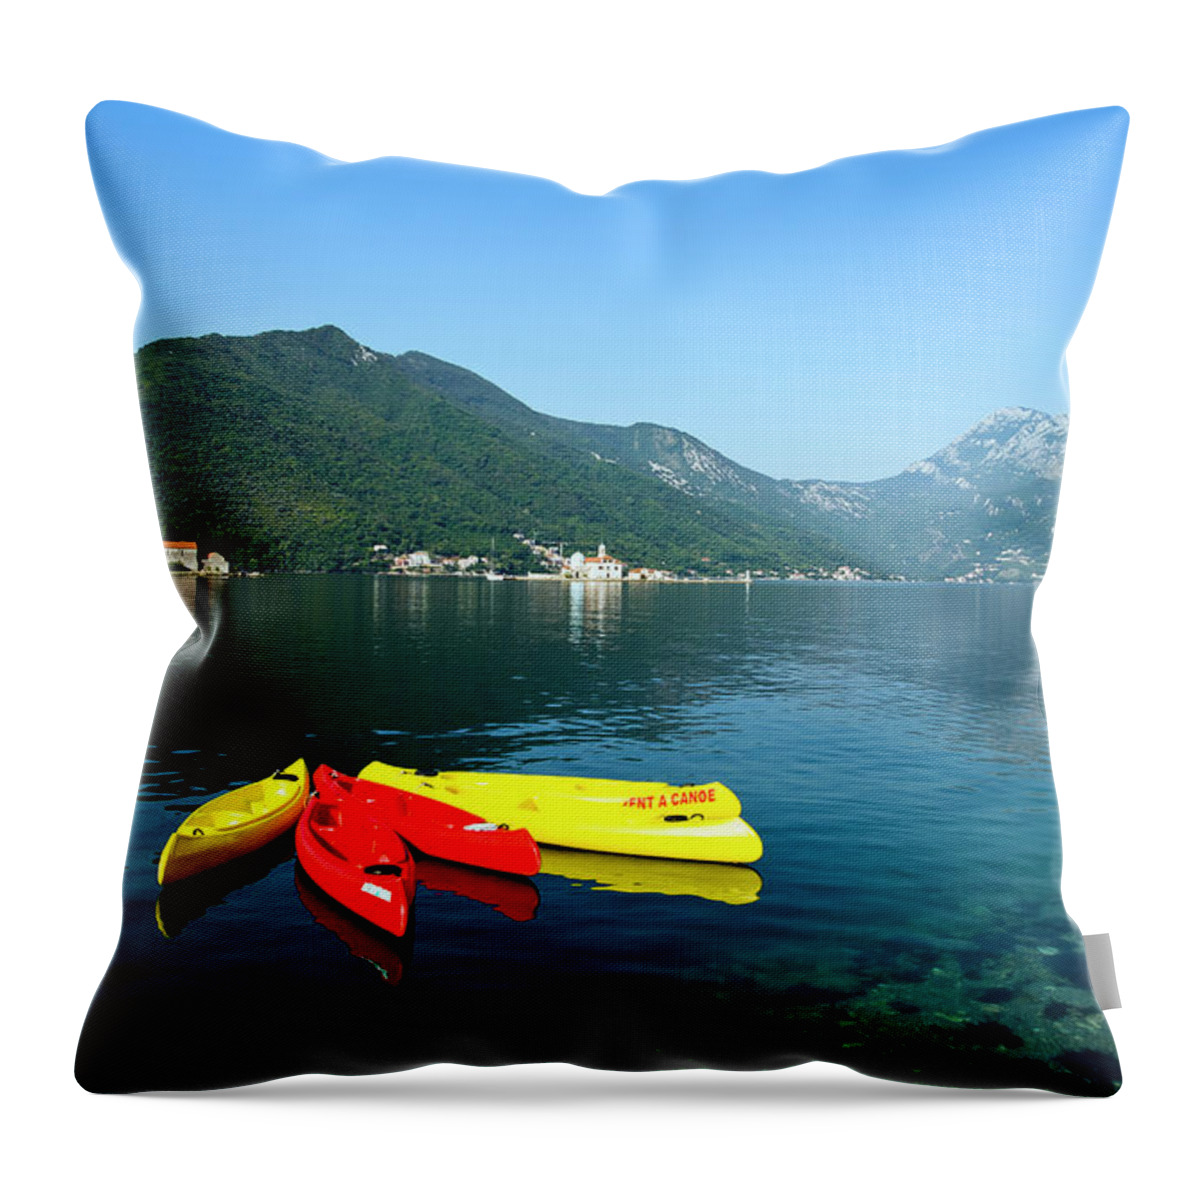 Estock Throw Pillow featuring the digital art Kayaks In Kotor Bay, Montenegro by Stipe Surac